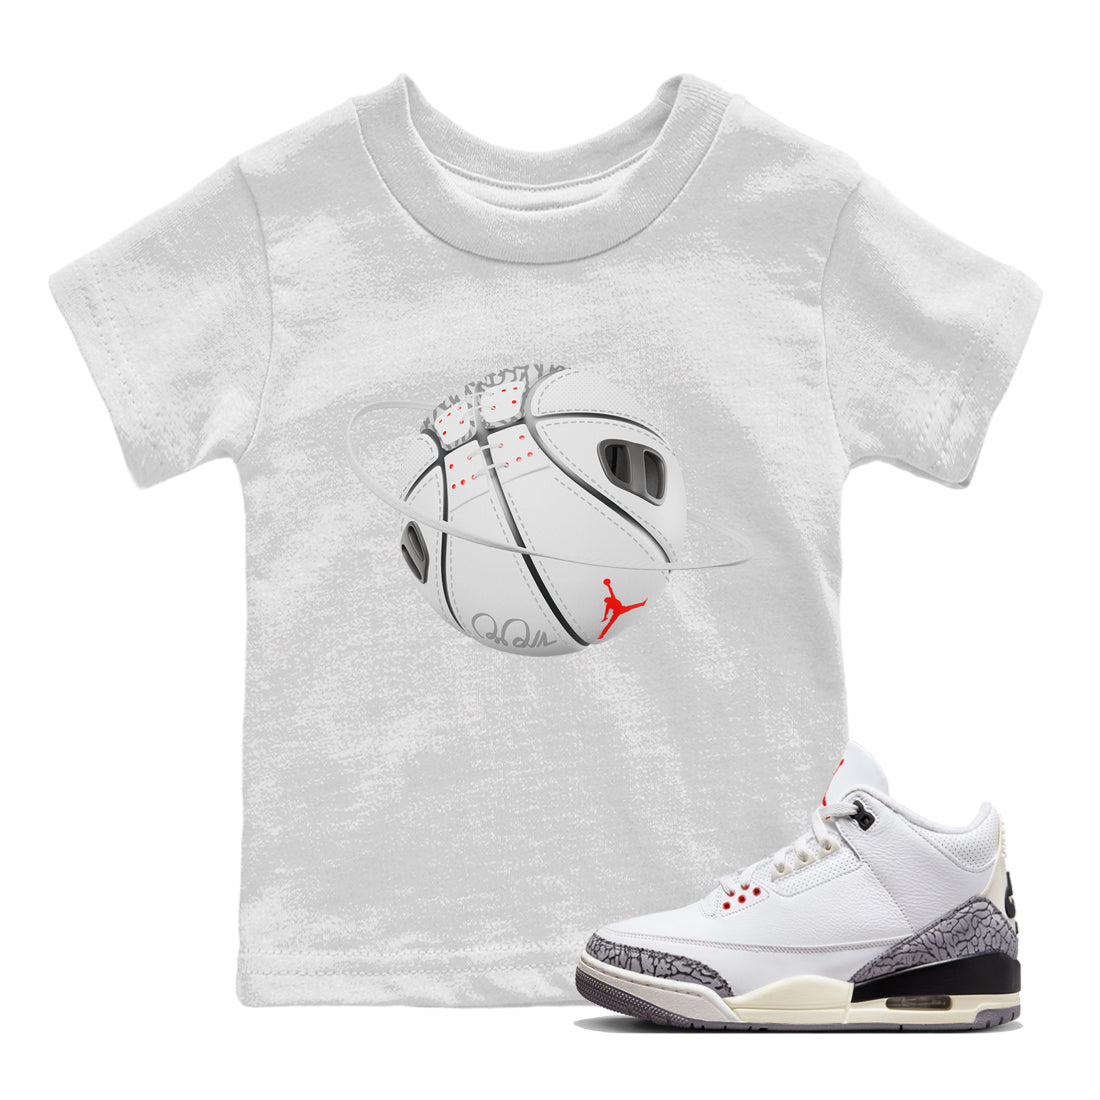 Air Jordan 3 White Cement Shirt To Match Jordans Basketball Planet Sneaker Tees AJ3 White Cement Drip Gear Zone Sneaker Matching Clothing Kids Shirts White 1